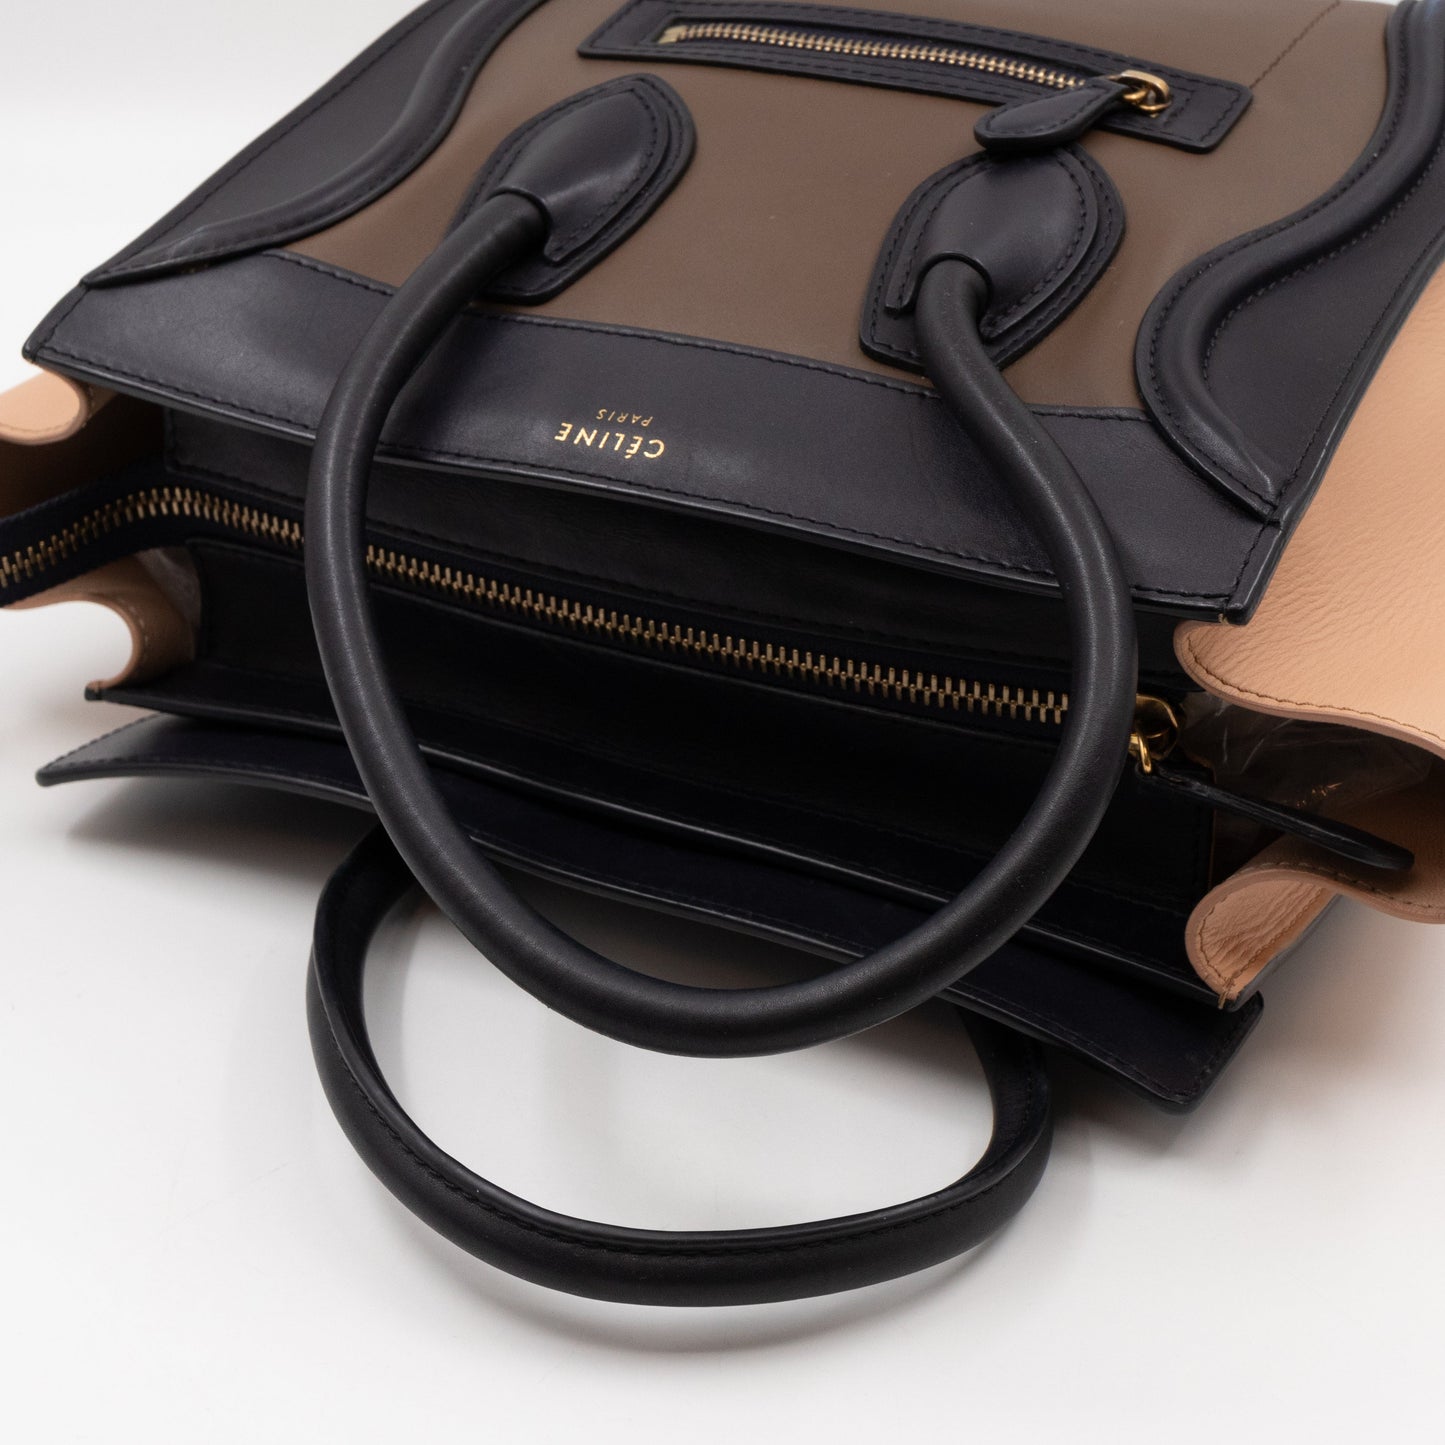 Micro Luggage Beige Brown Black Leather